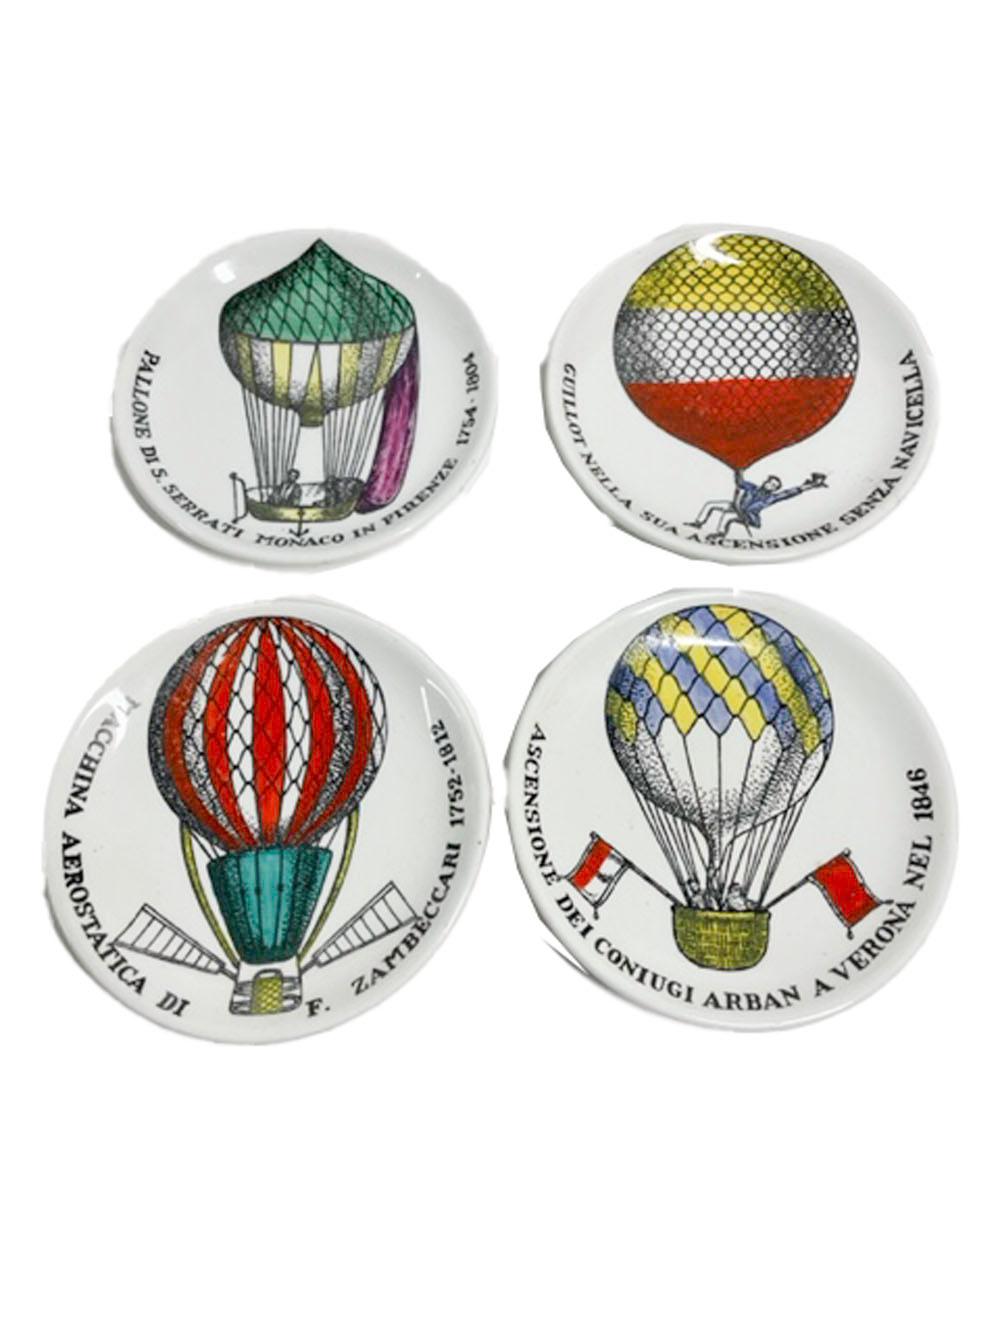 MCM-Keramikuntersetzer von Fornasetti, bemalt mit Heißluftballons, „Palloni“ (20. Jahrhundert) im Angebot